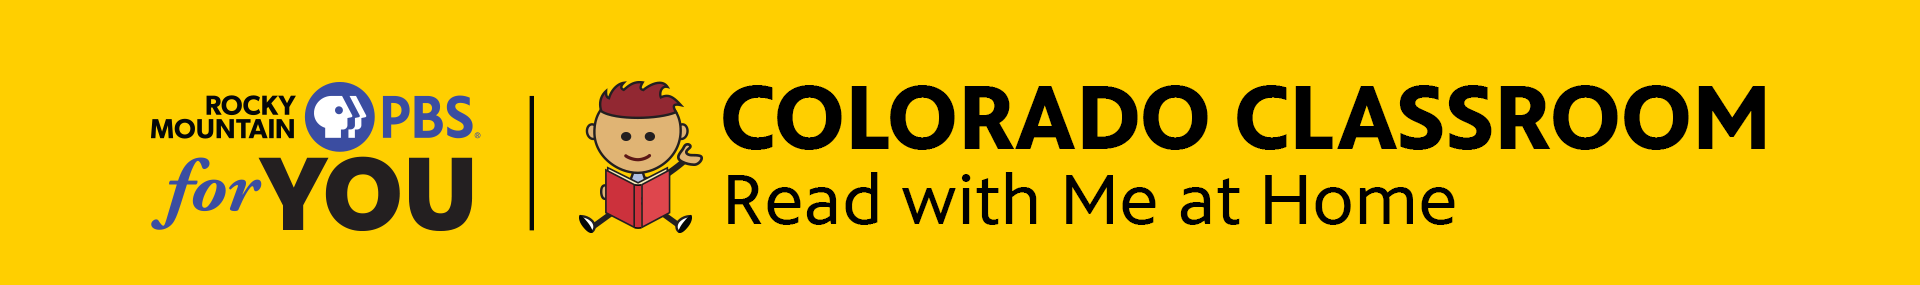 Colorado Classroom Banner